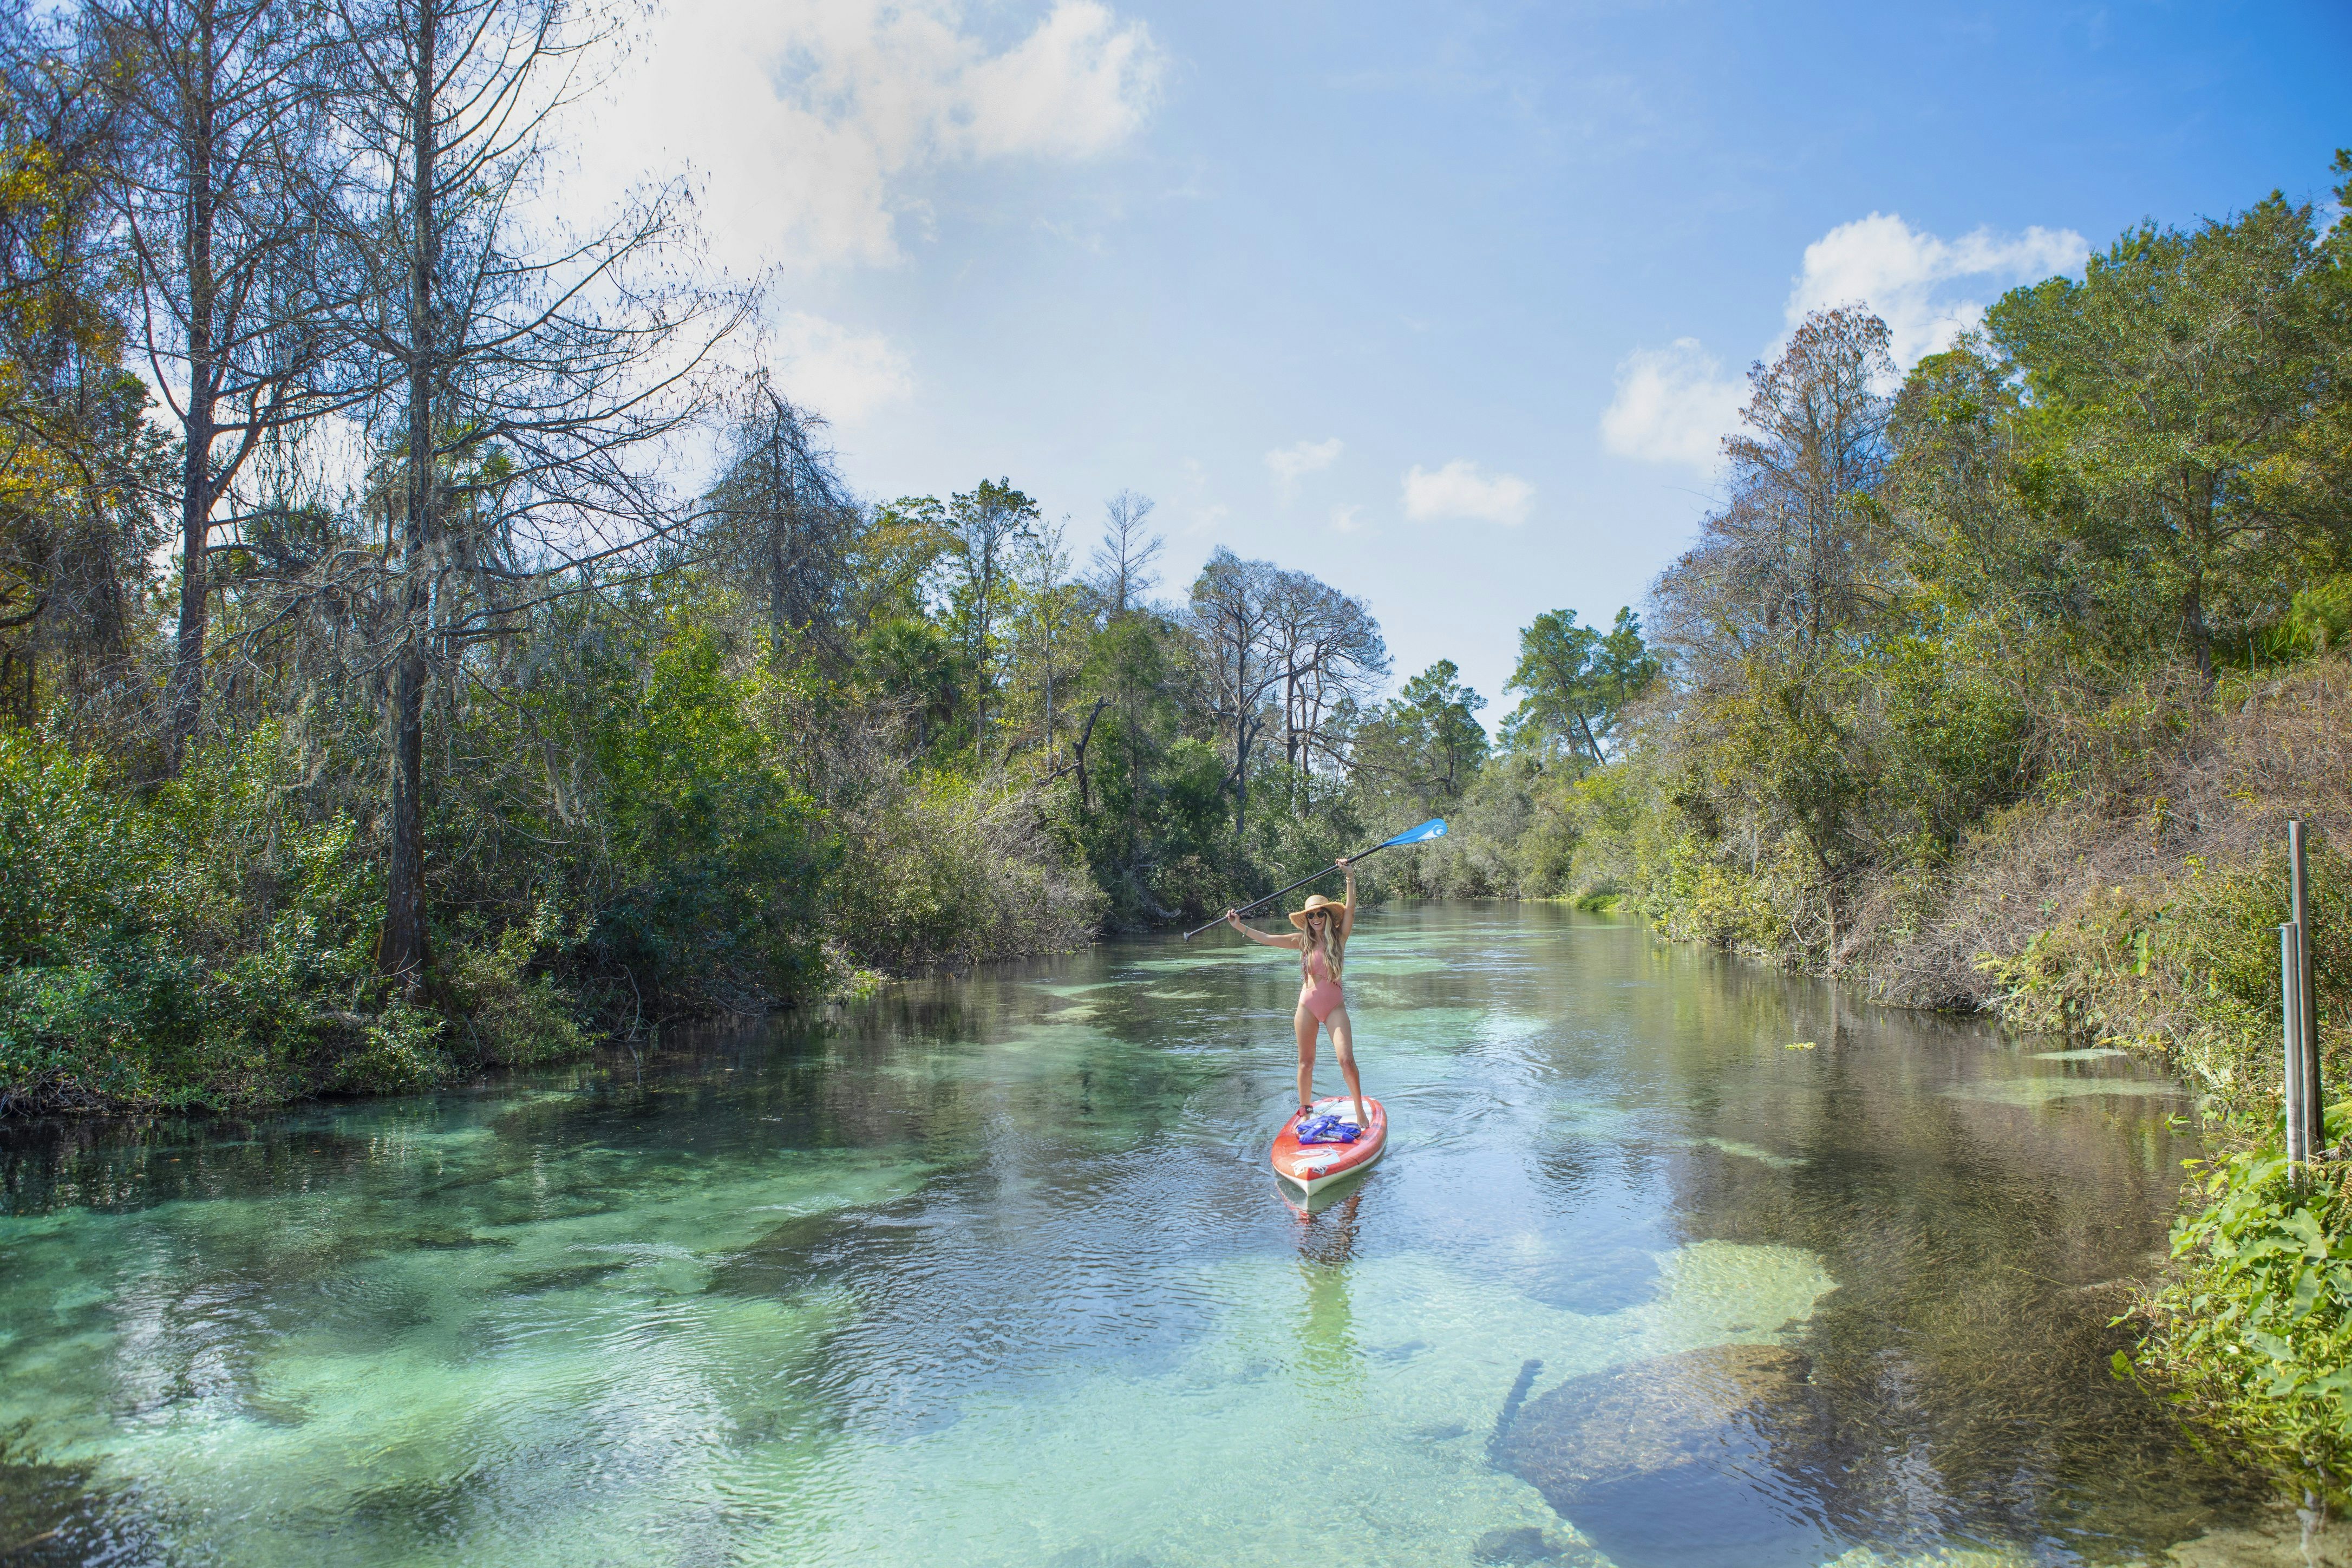 16 Tage Nachhaltig Reisen in Florida